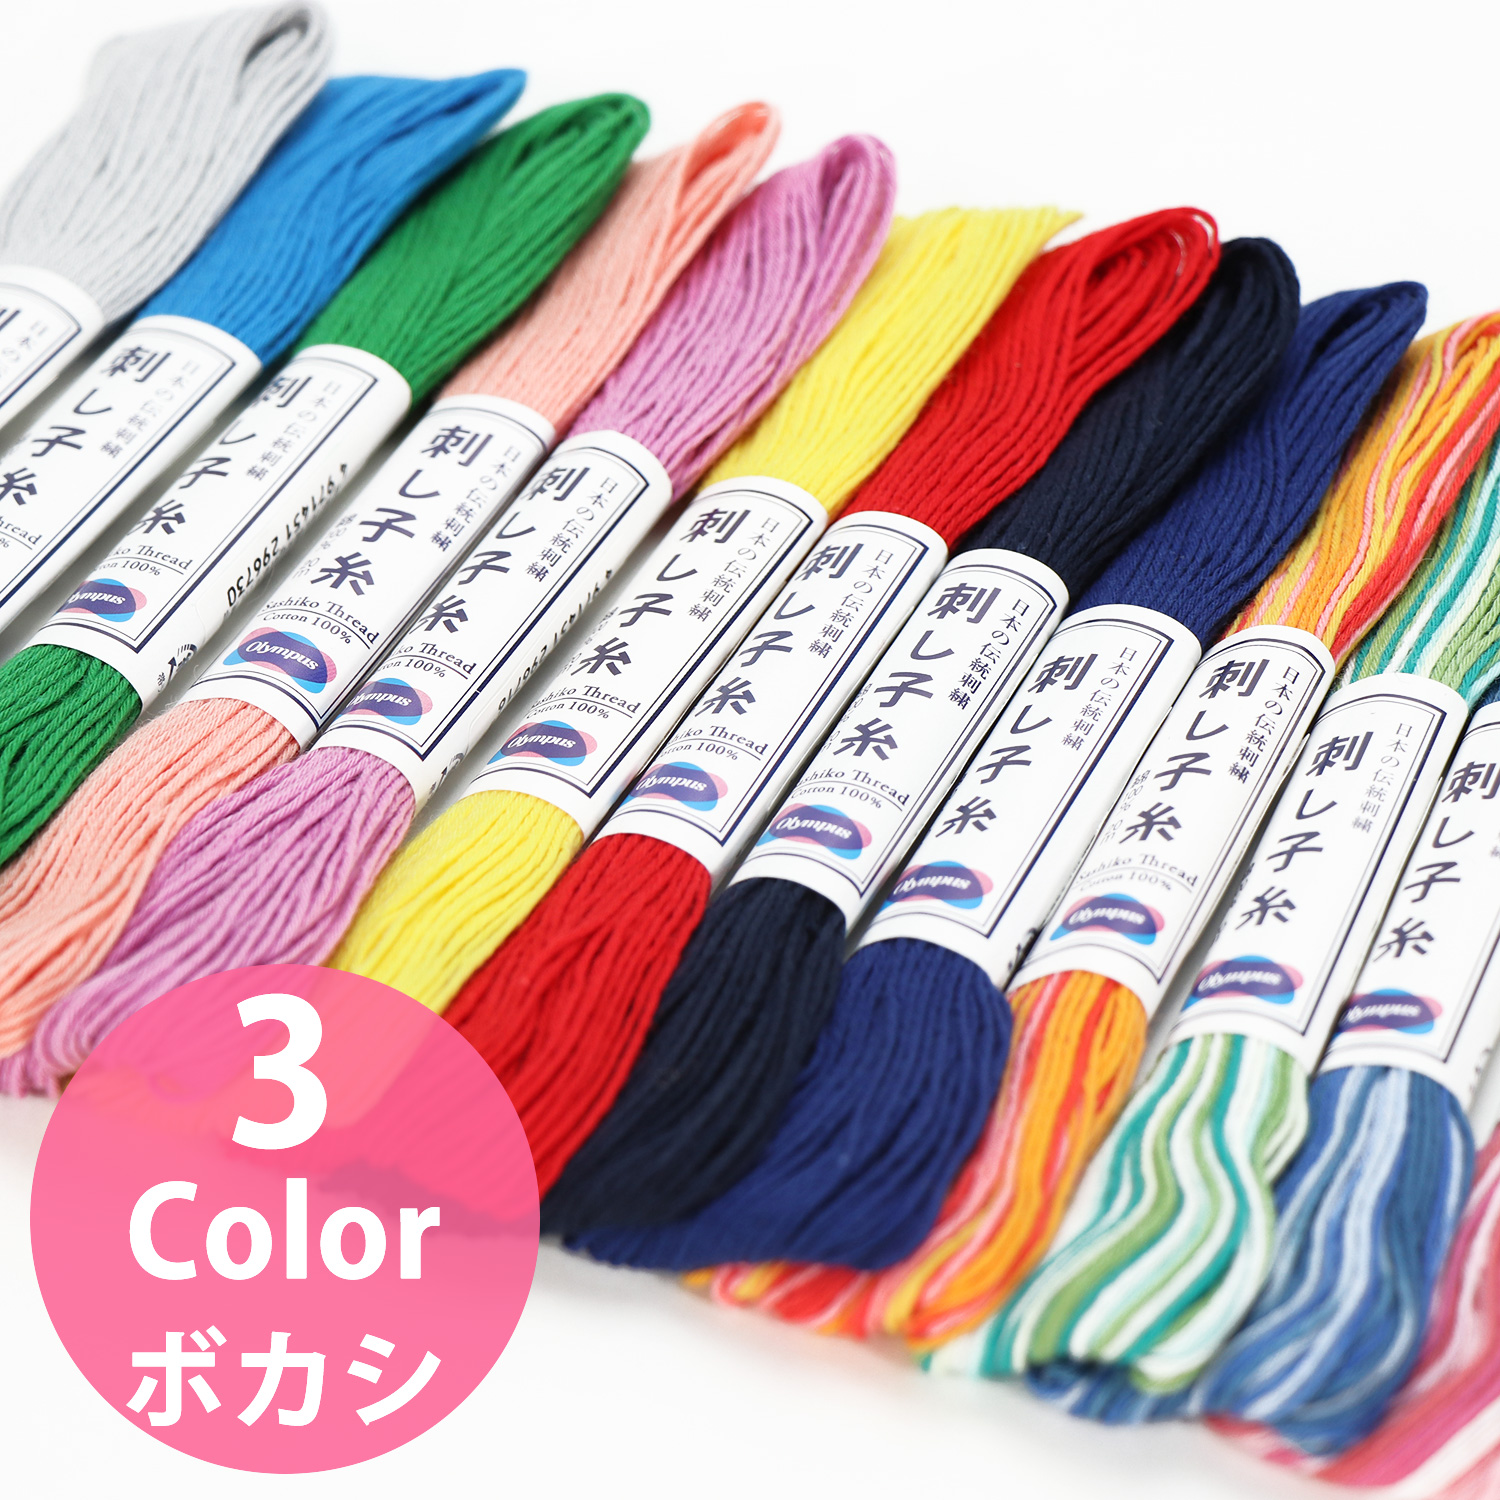 Olympus SASHIKO Embroidery Thread Bokashi 1pcs 20m Skein (pack)